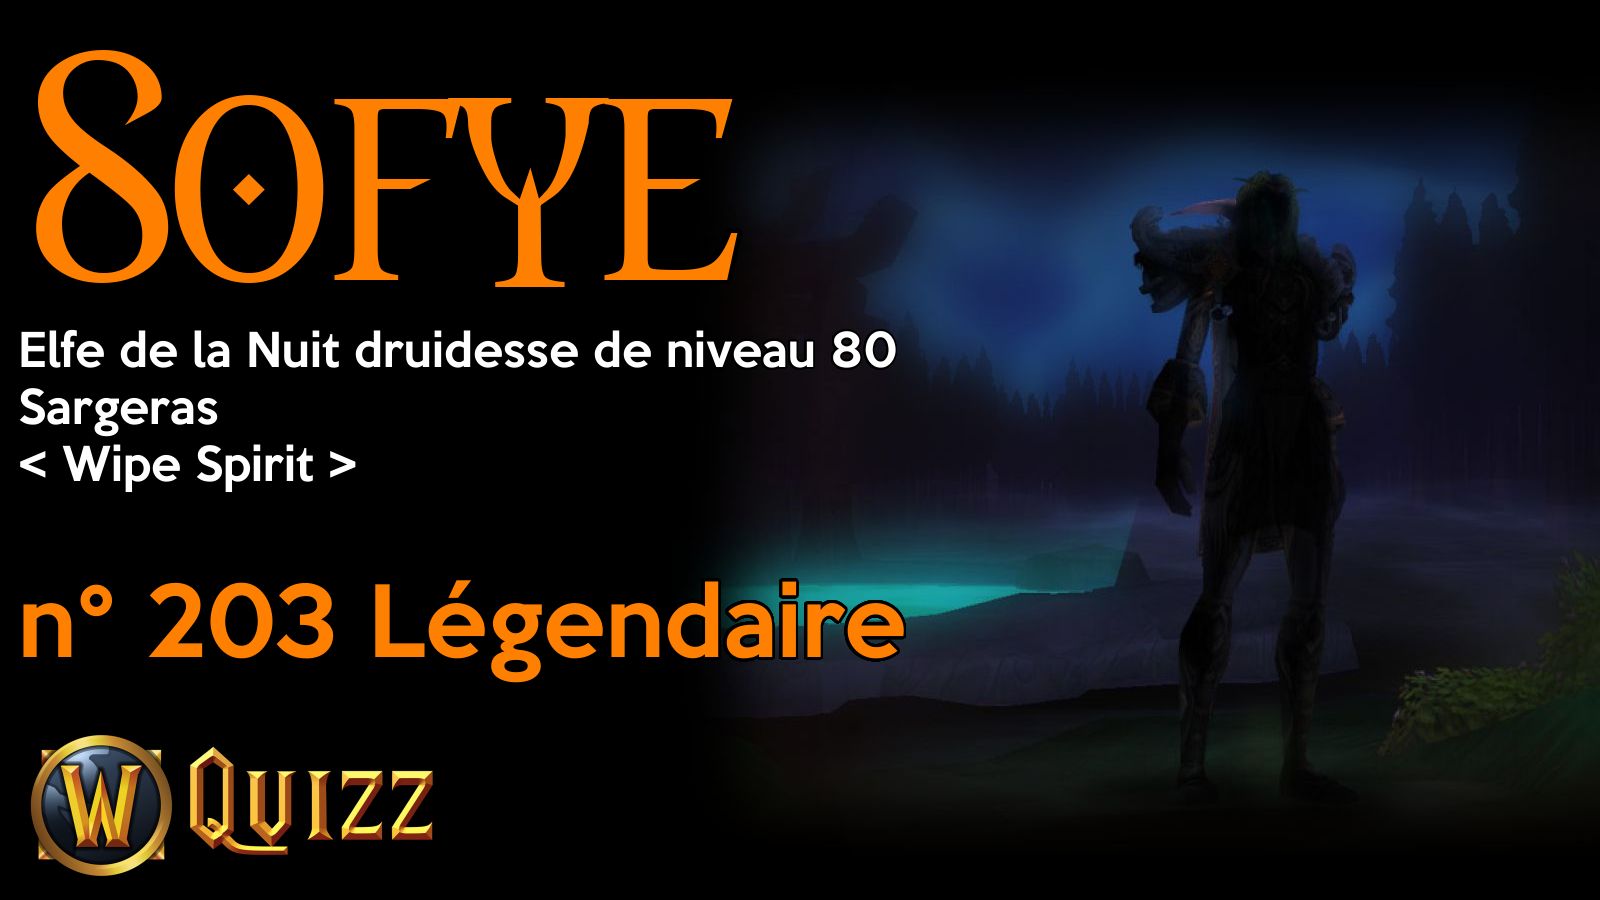 Sofye, Elfe de la Nuit druidesse de niveau 80, Sargeras